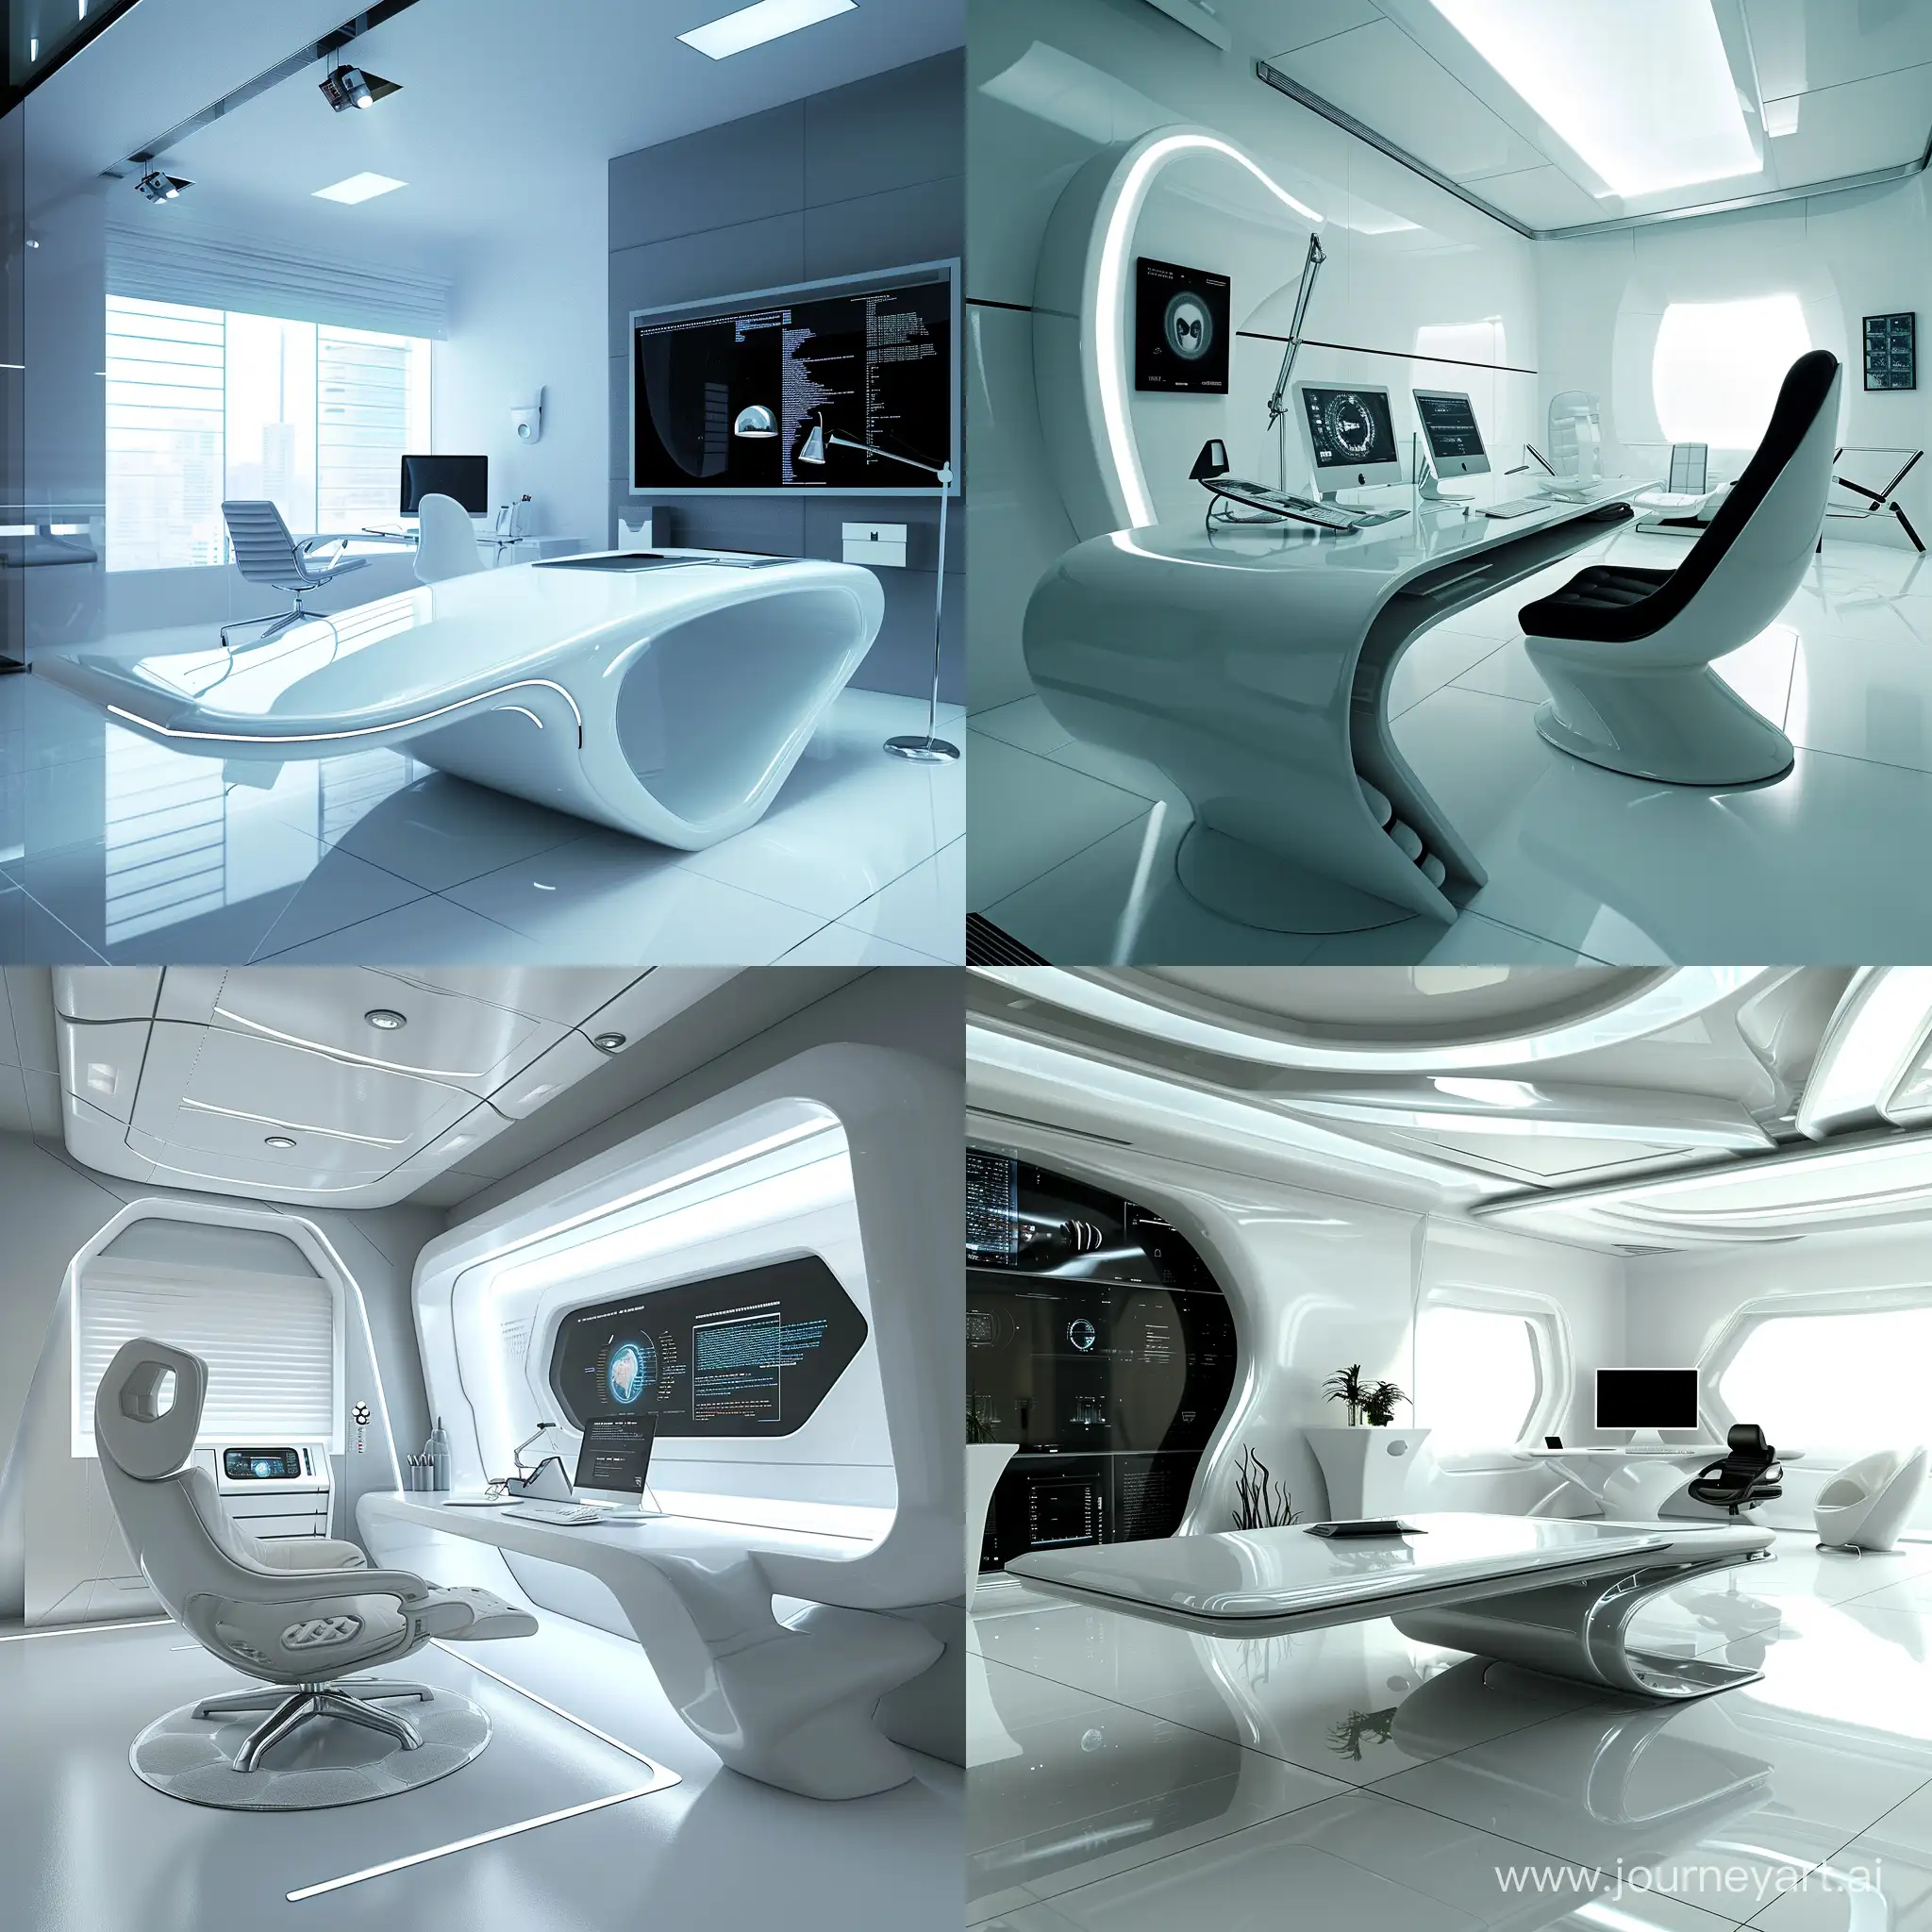 imagine minimalist interior design style, futuristic home office, sleek furniture, state-of-the-art technology
